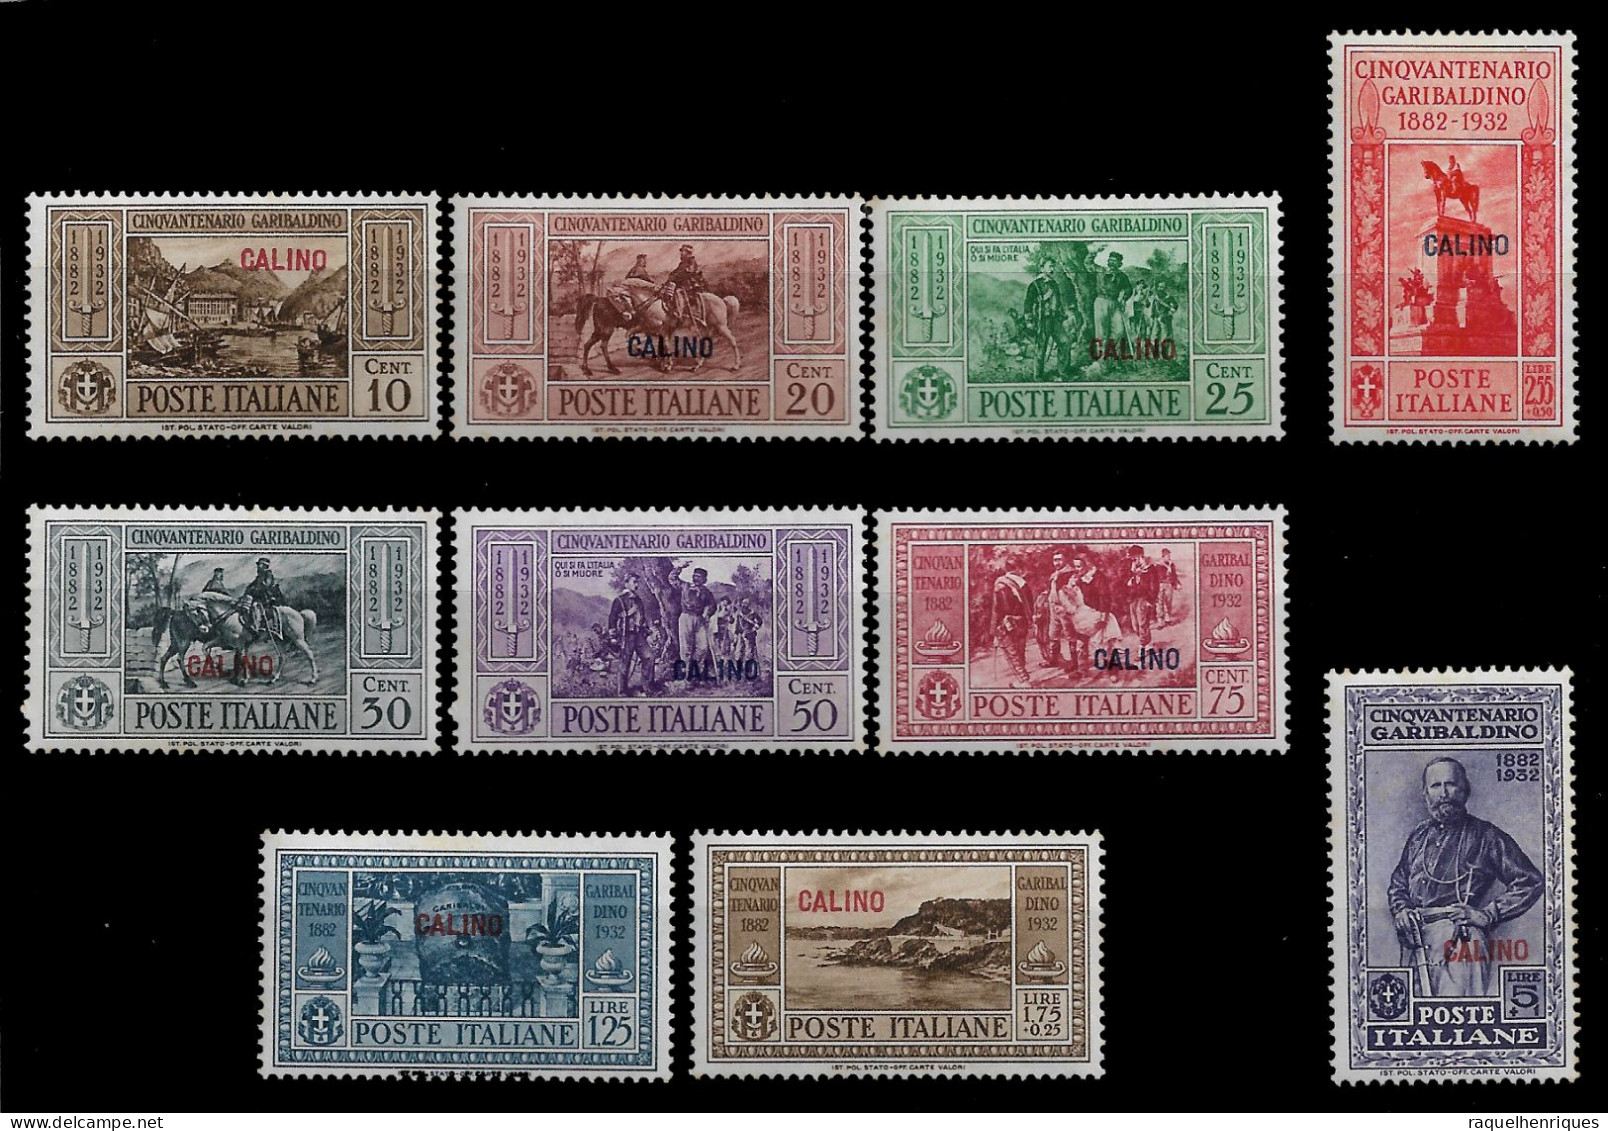 Postage Stamps Of Italian Colonies - CALINO 1932 Giuseppe Garibaldi SET MNH (BA5#402) - Egée (Calino)